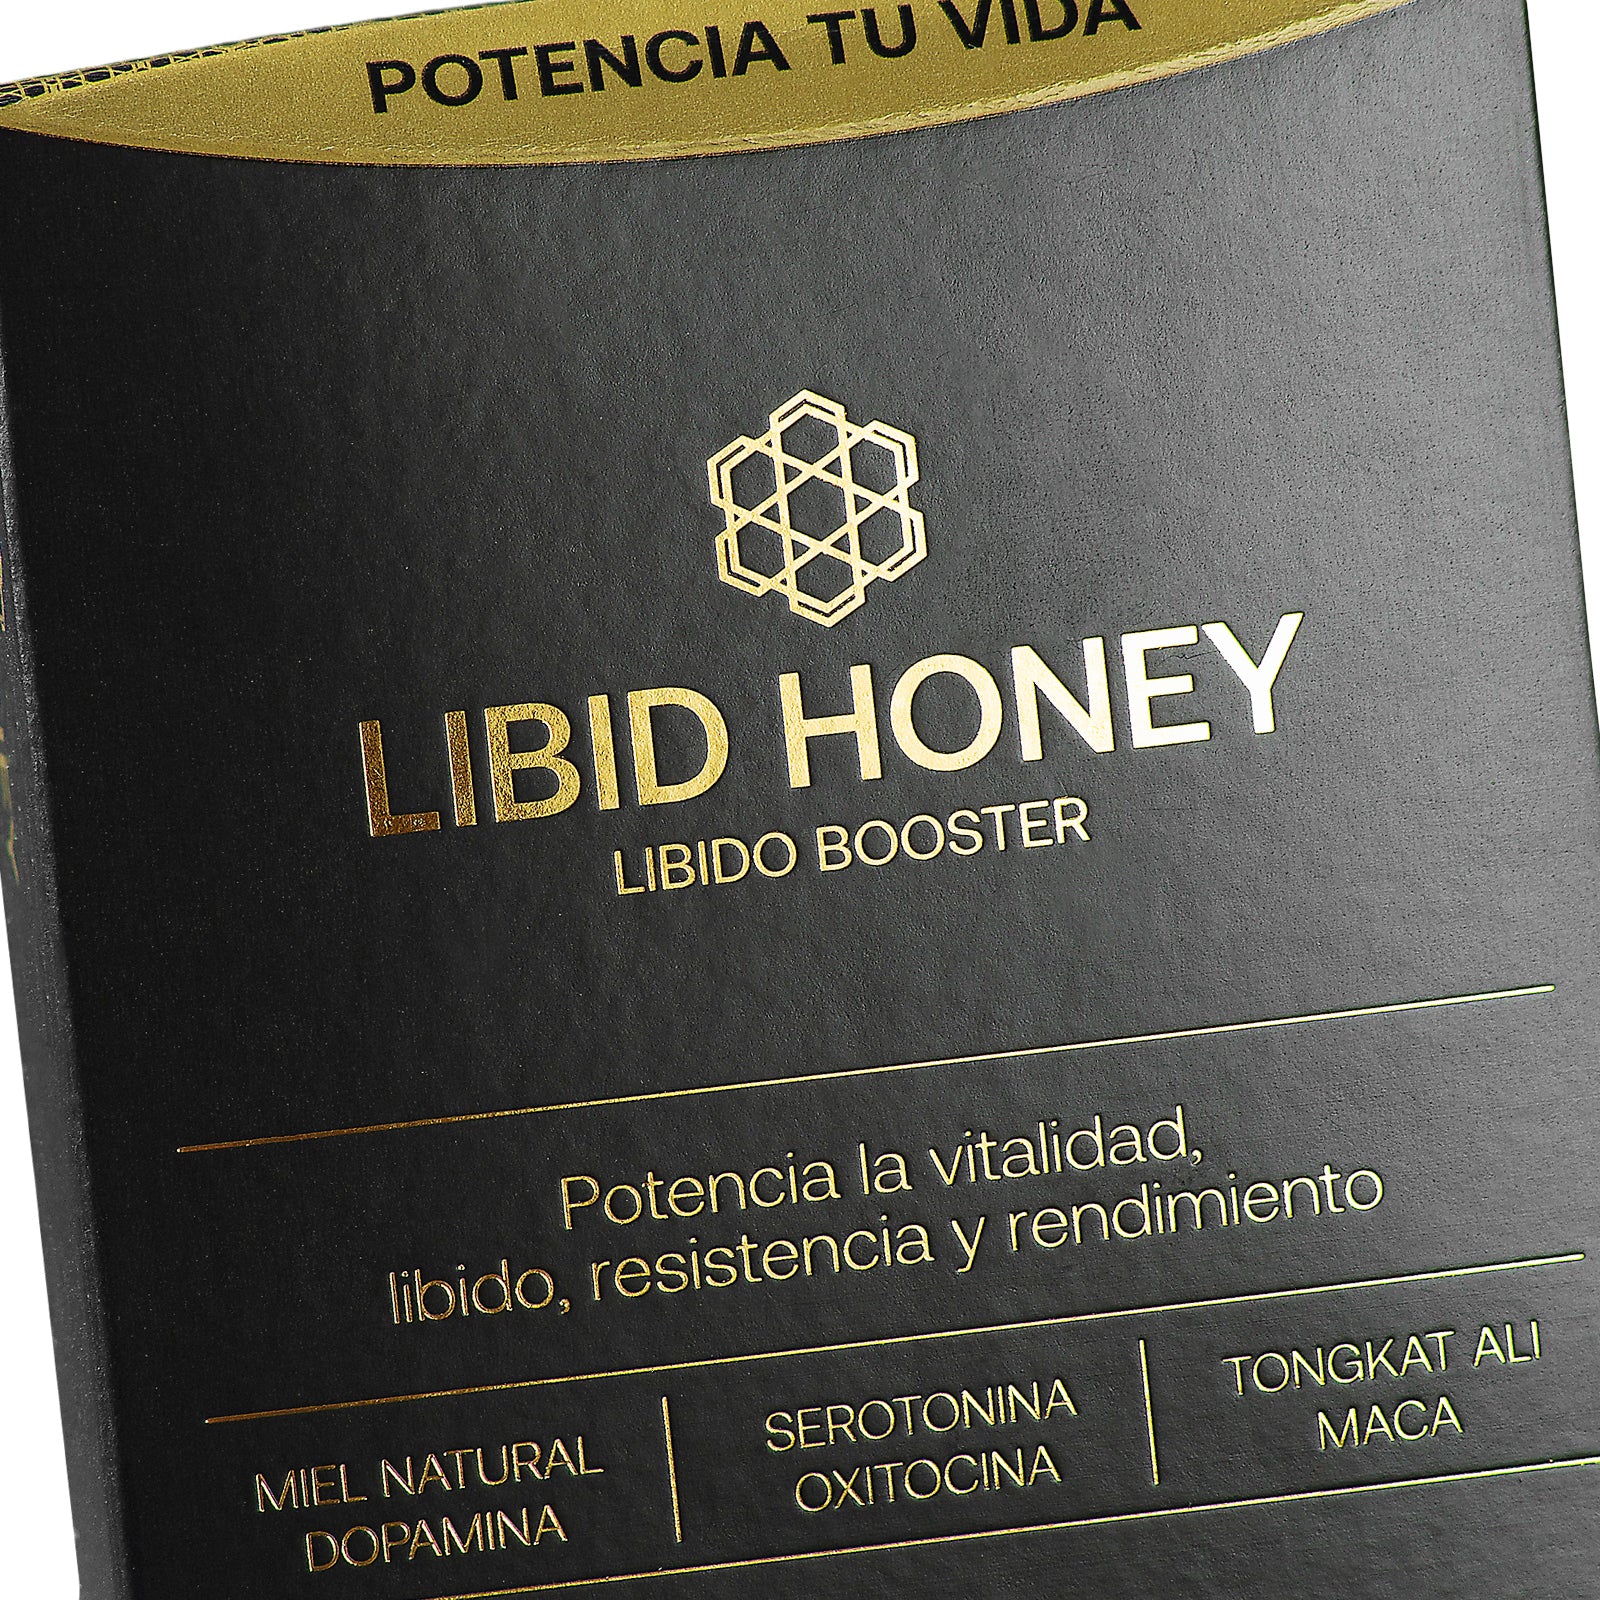 Libid Honey box close-up.